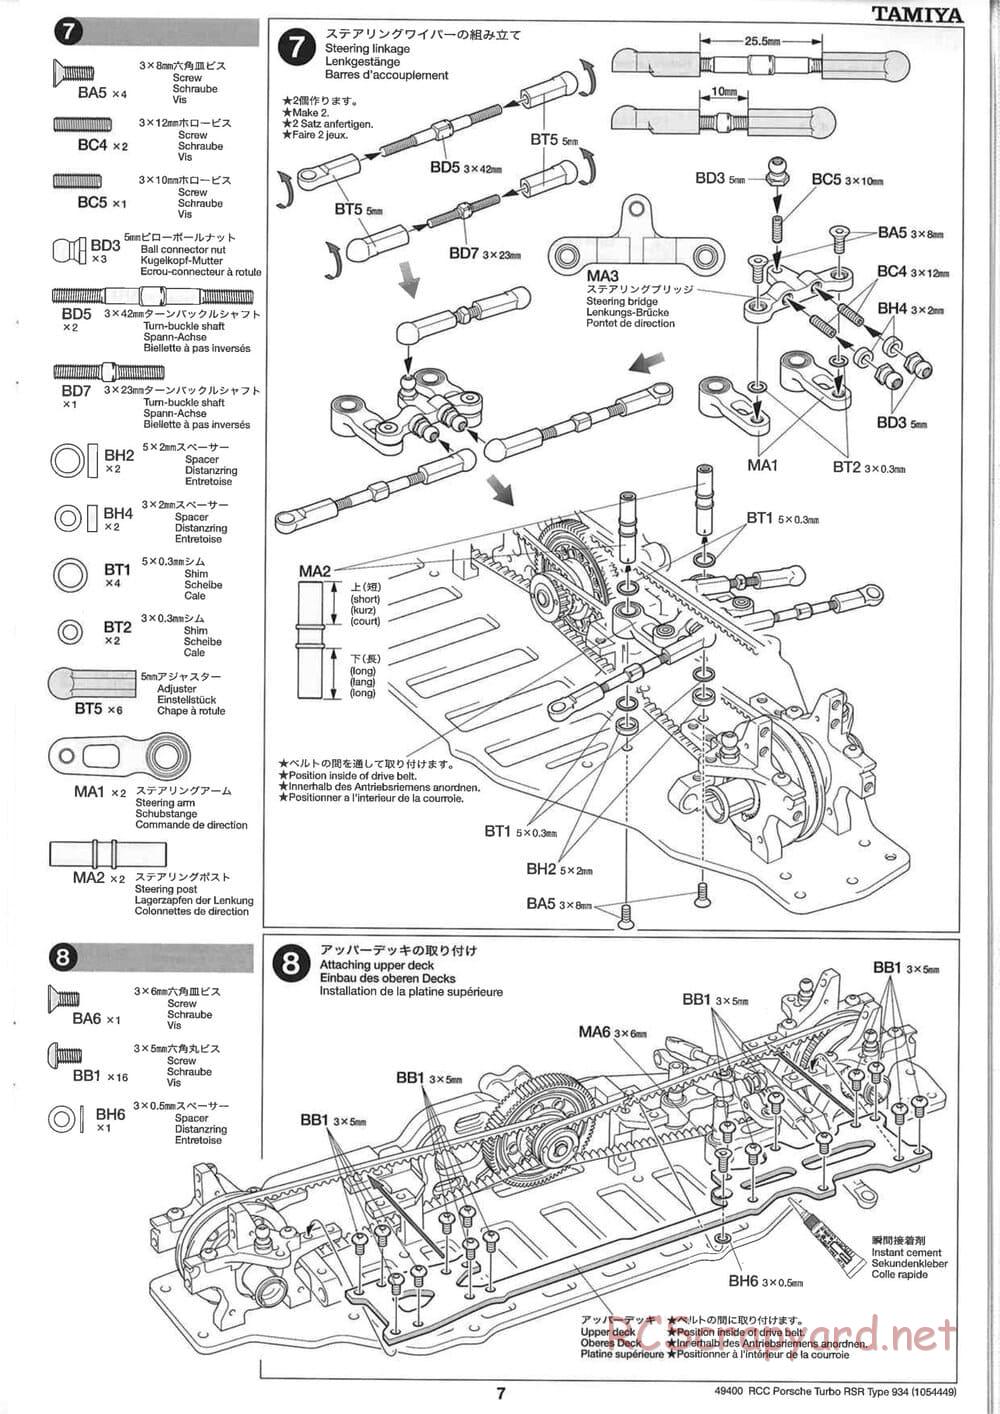 Tamiya - Porsche Turbo RSR Type 934 - TA05 Chassis - Manual - Page 7